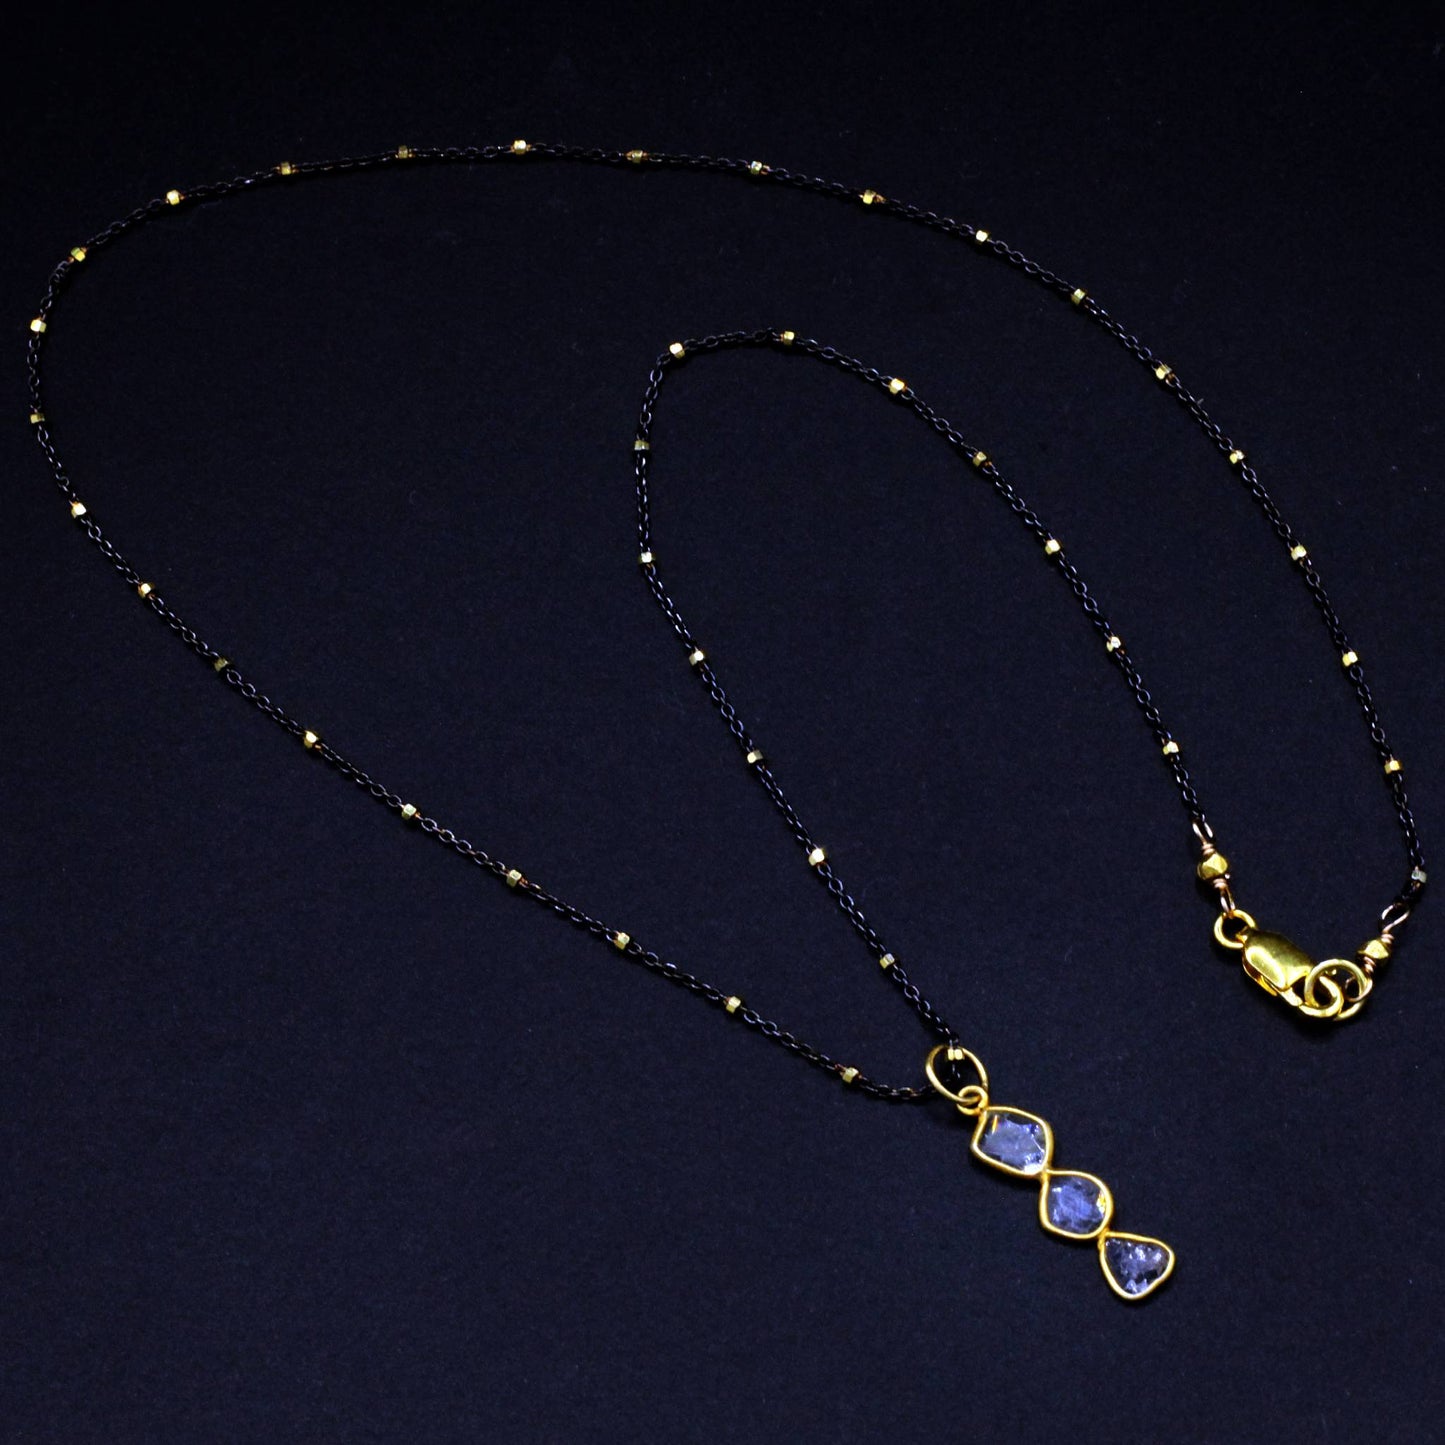 Robindira Unsworth Jewelry | Diamond Slice + 22k Gold Vermeil Collar Necklace | Firecracker